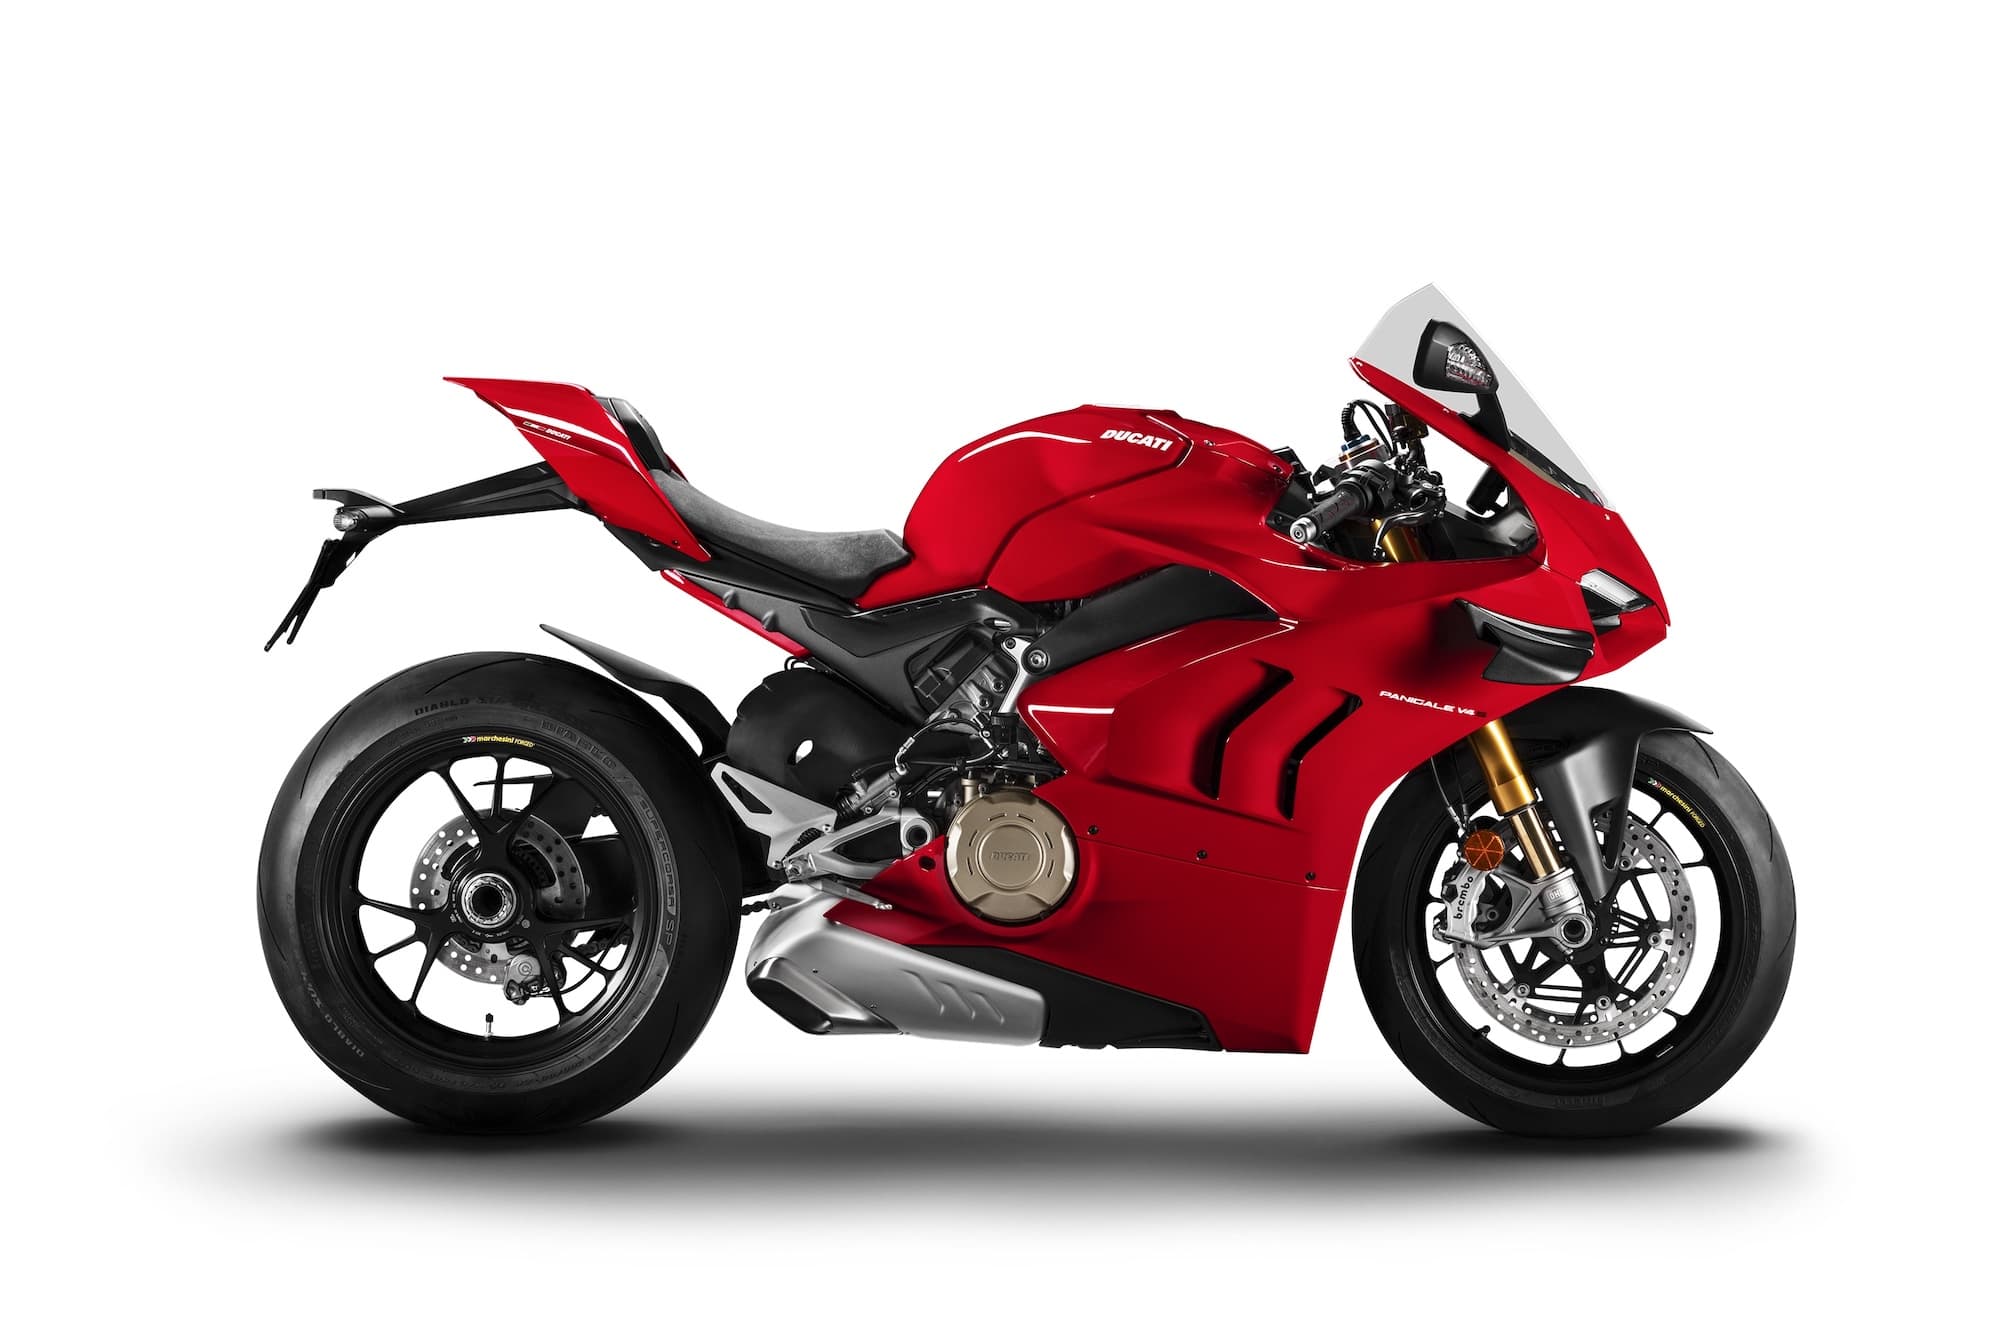 2020 2021 Ducati Panigale V4 S RHS studio image white background